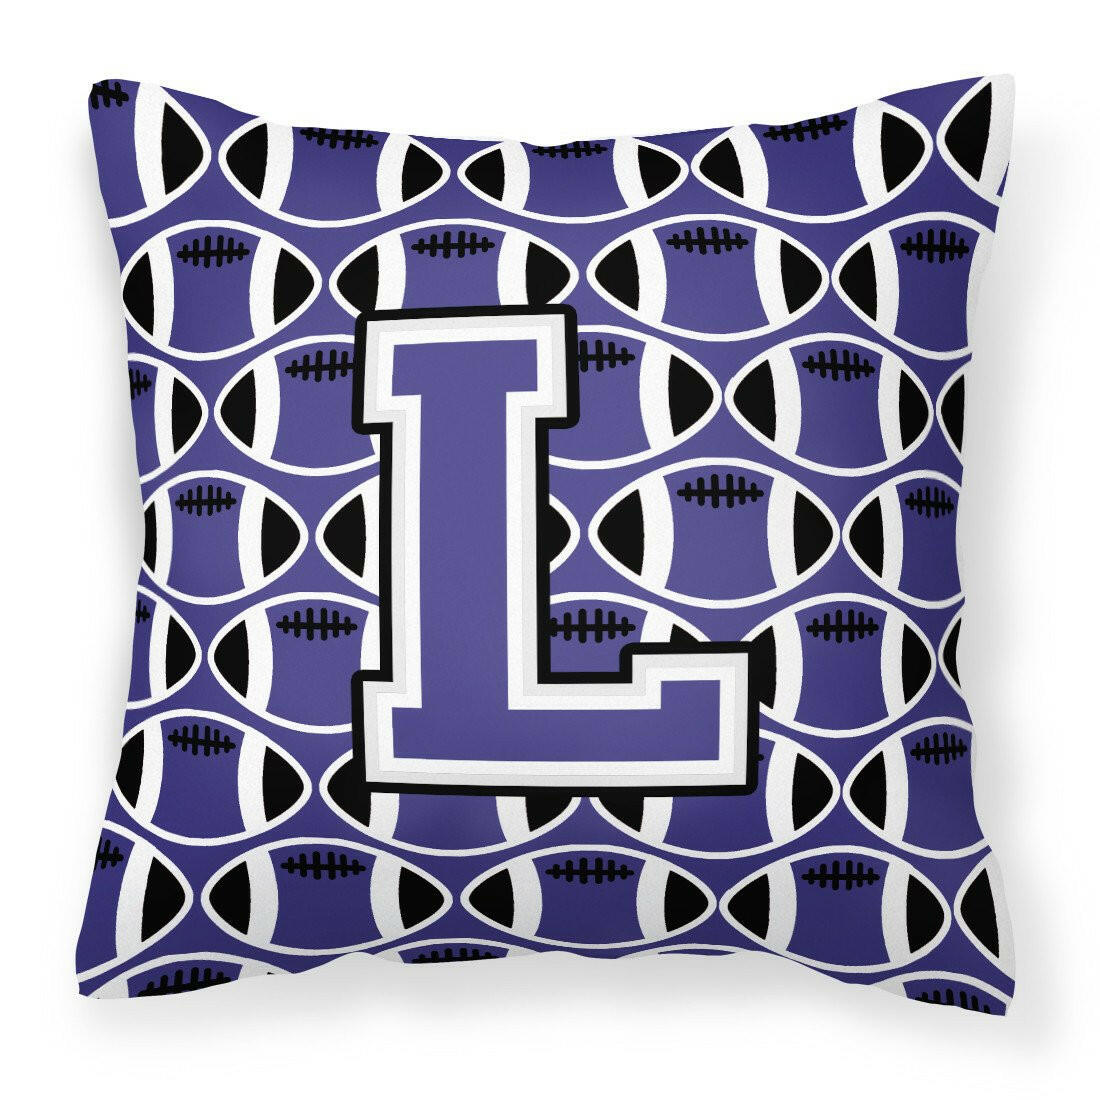 Letter L Football Purple and White Fabric Decorative Pillow CJ1068-LPW1414 by Caroline's Treasures